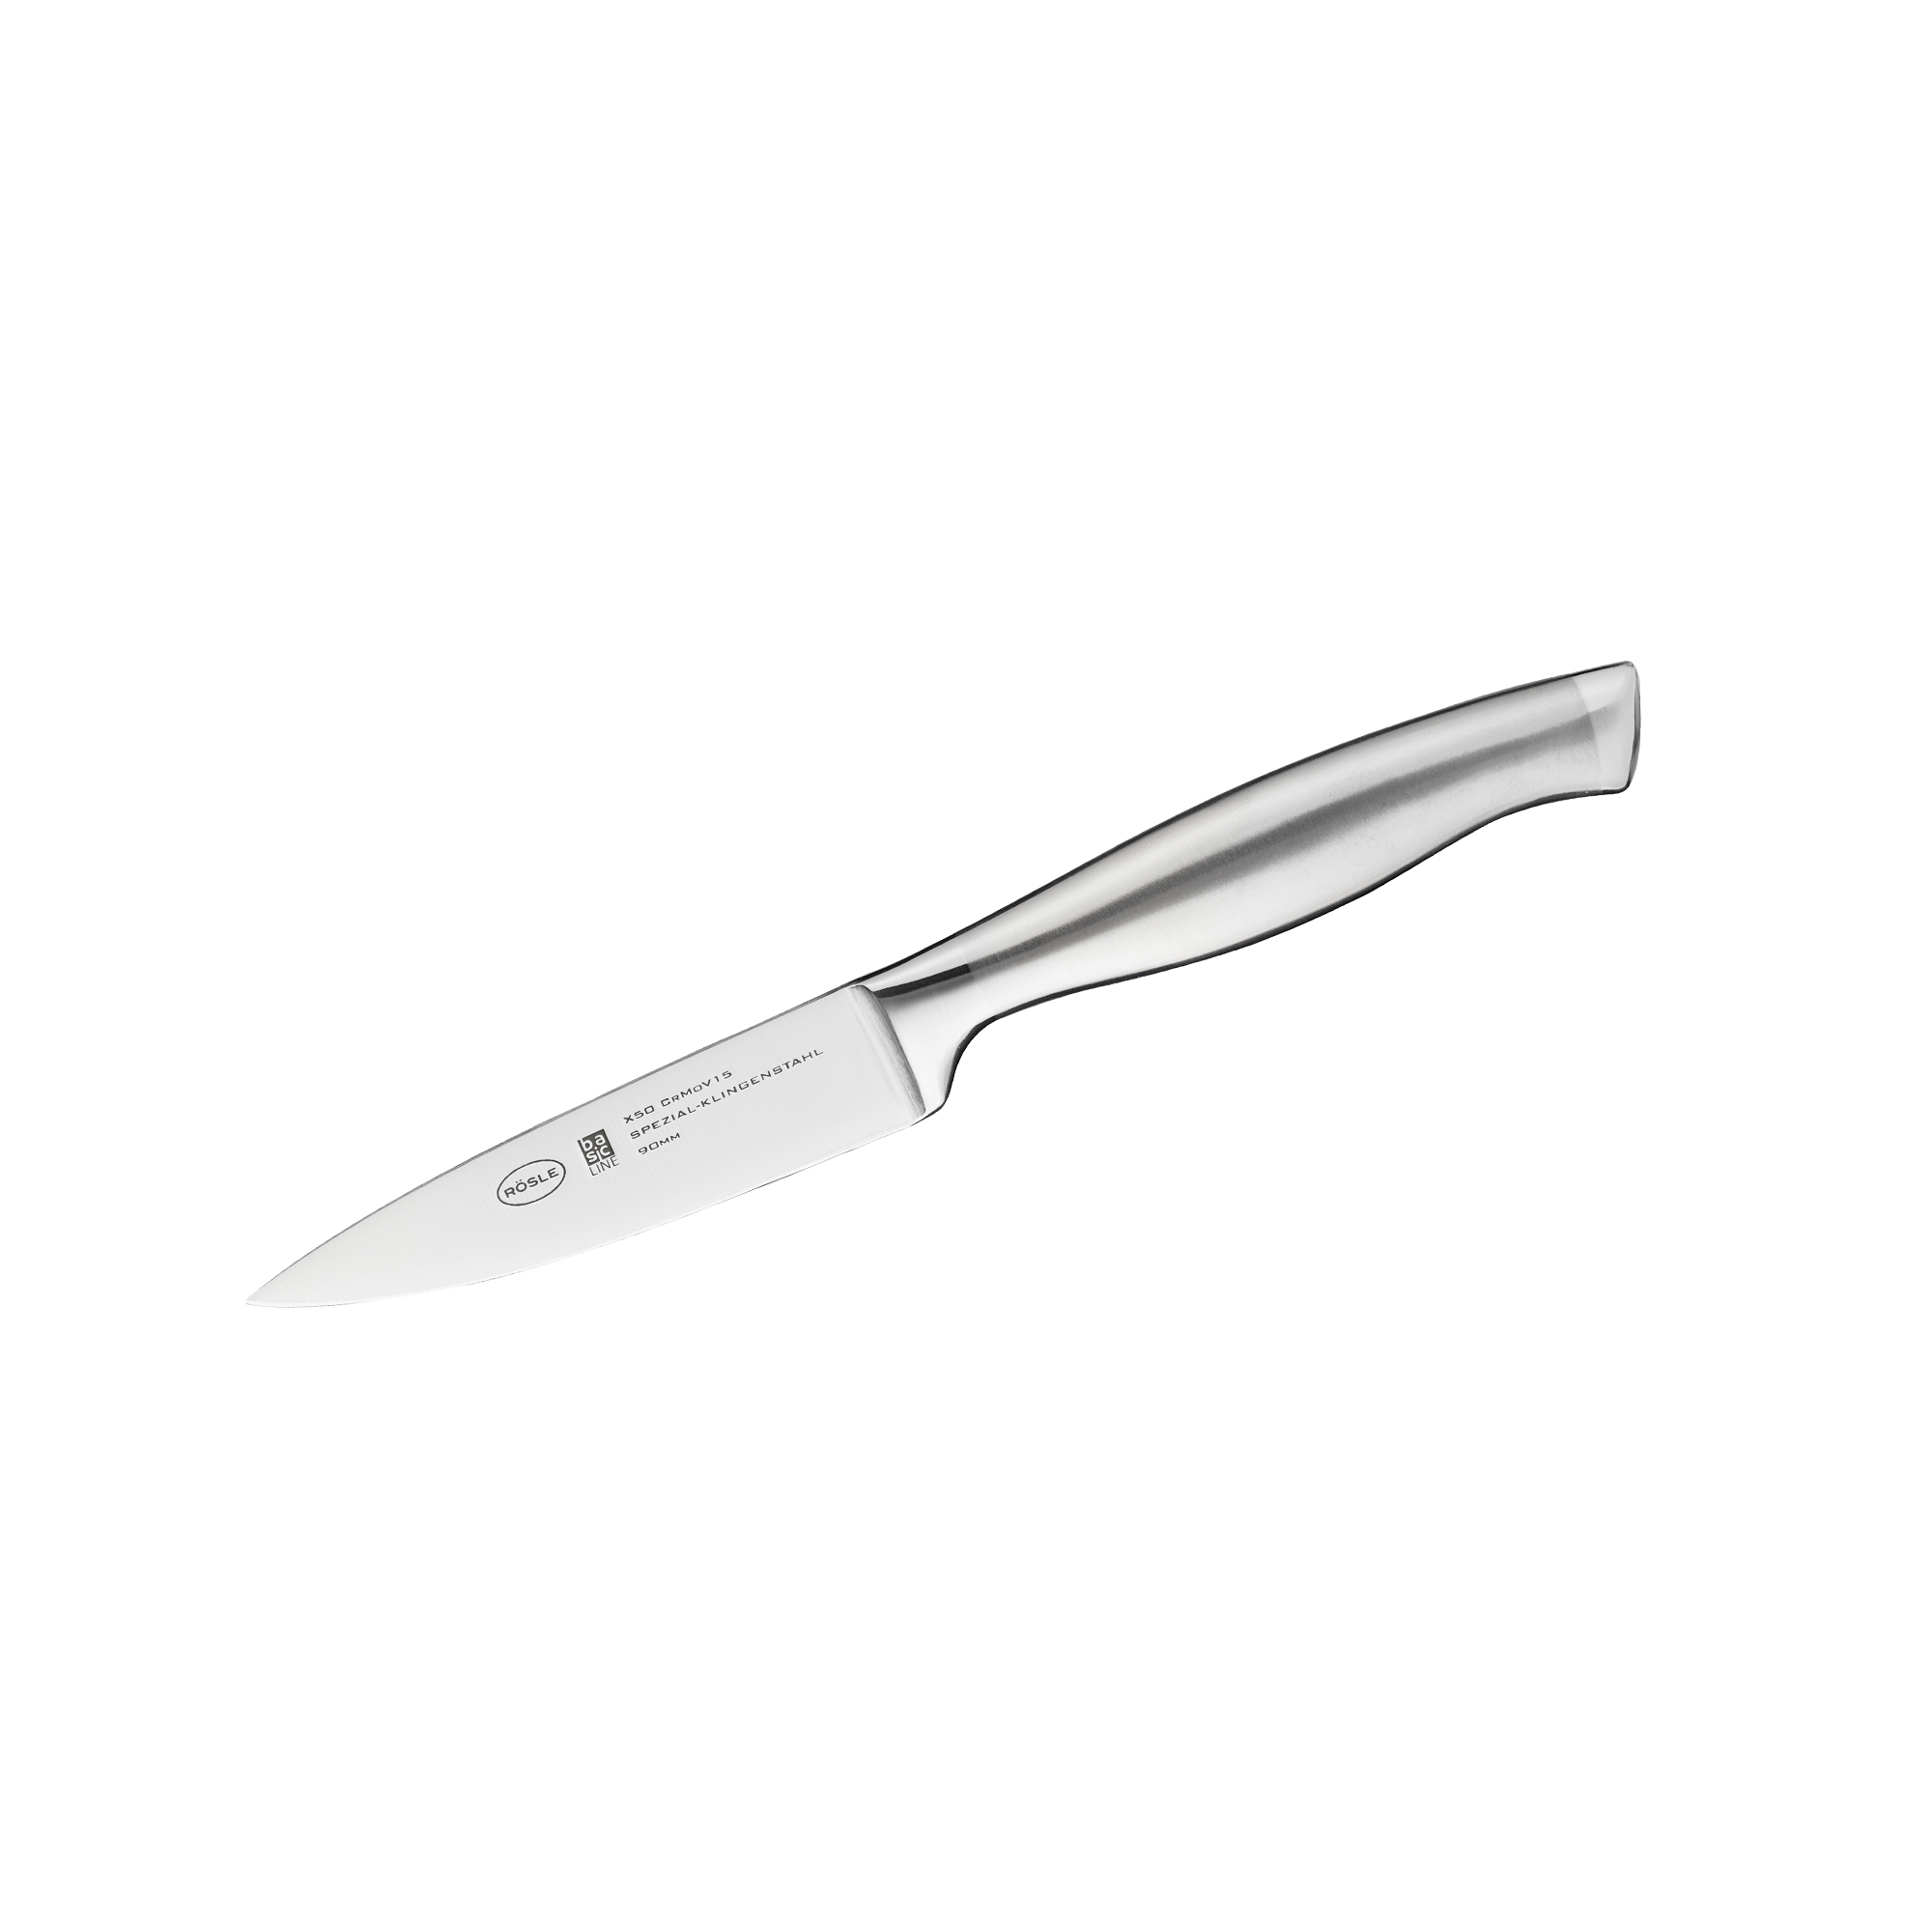 Utility knife "Basic Line" 9 cm I 3.5 in.